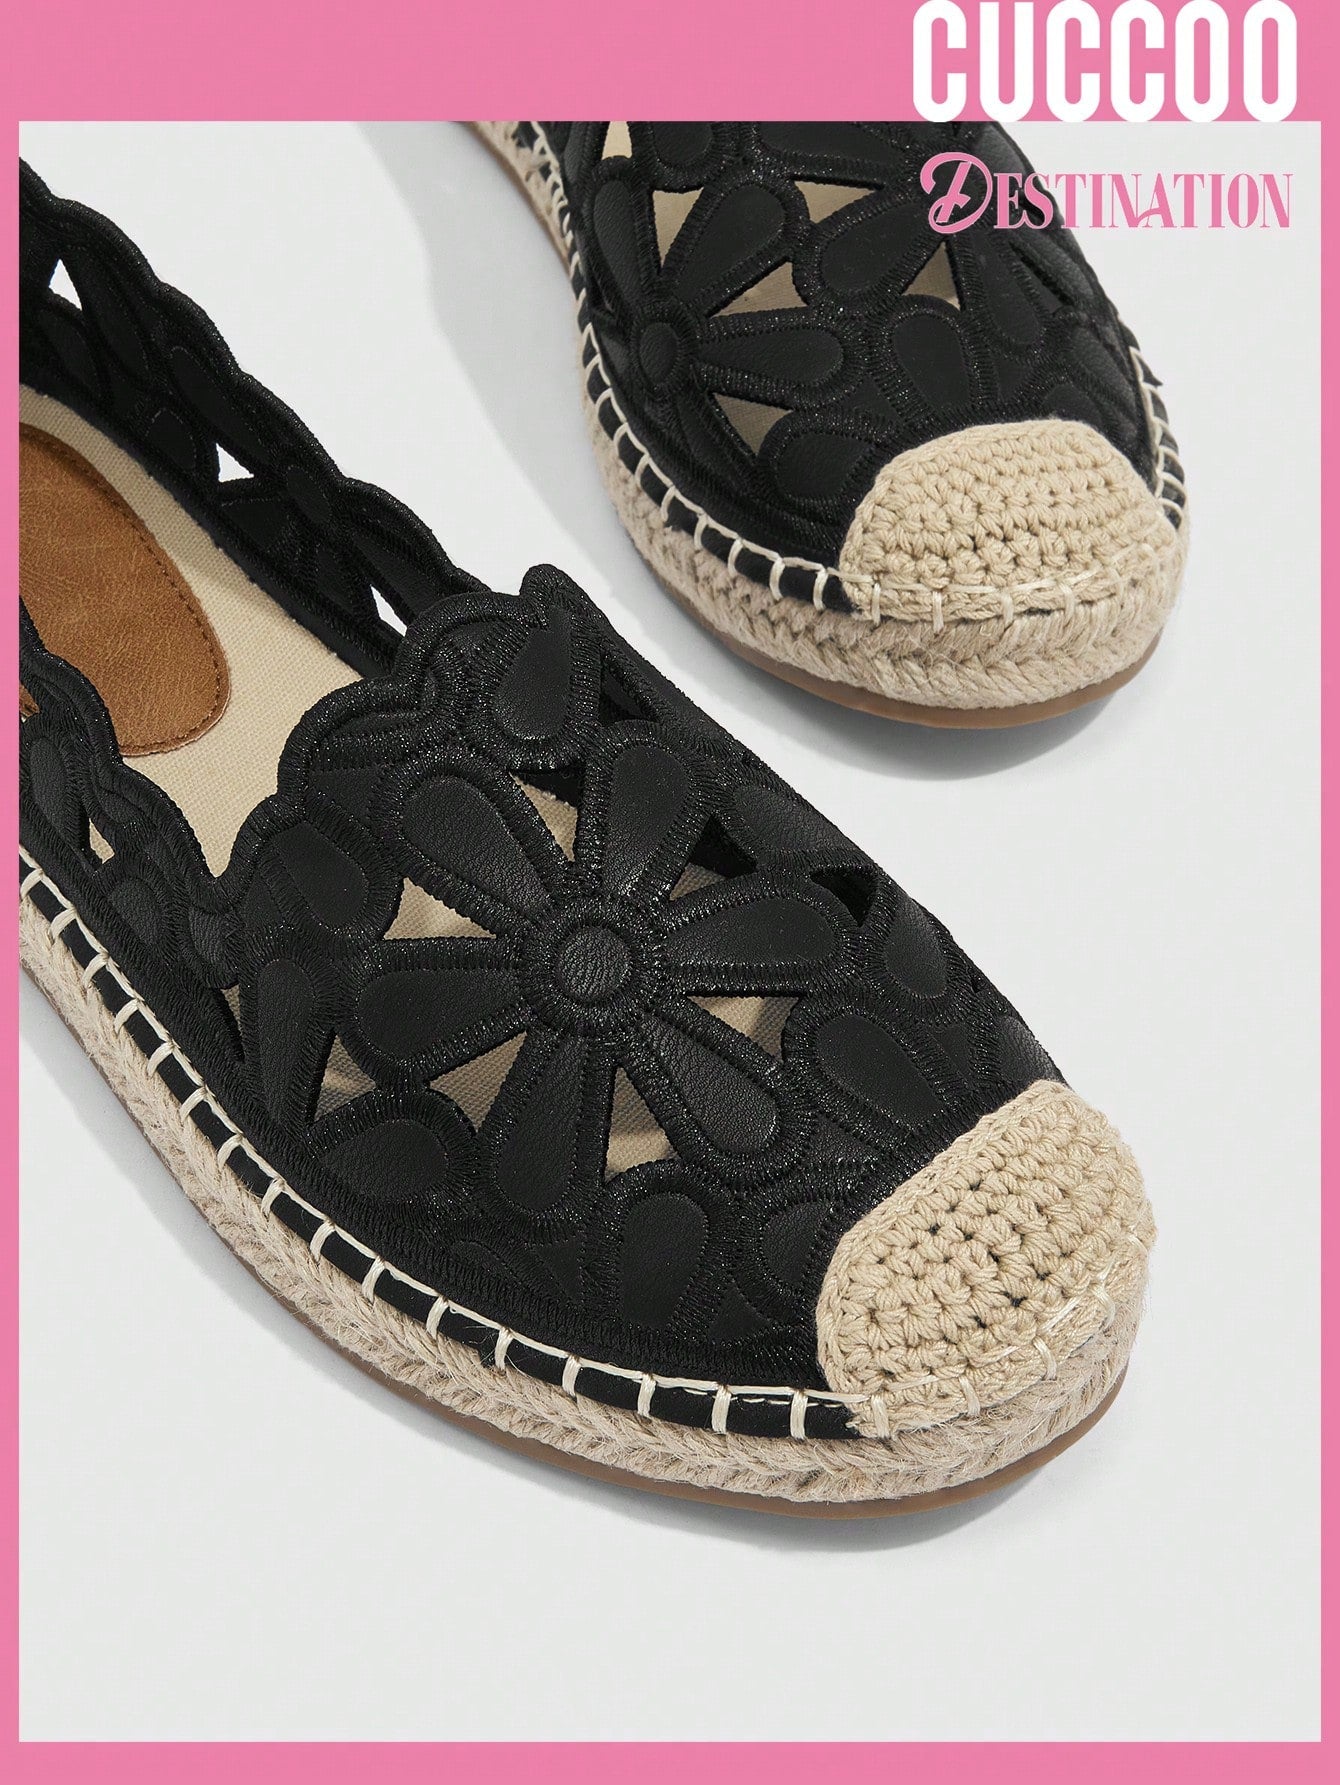 Cuccoo Destination Collection Women's Shoes Floral Embroidery Fashion Espadrille Black Flats